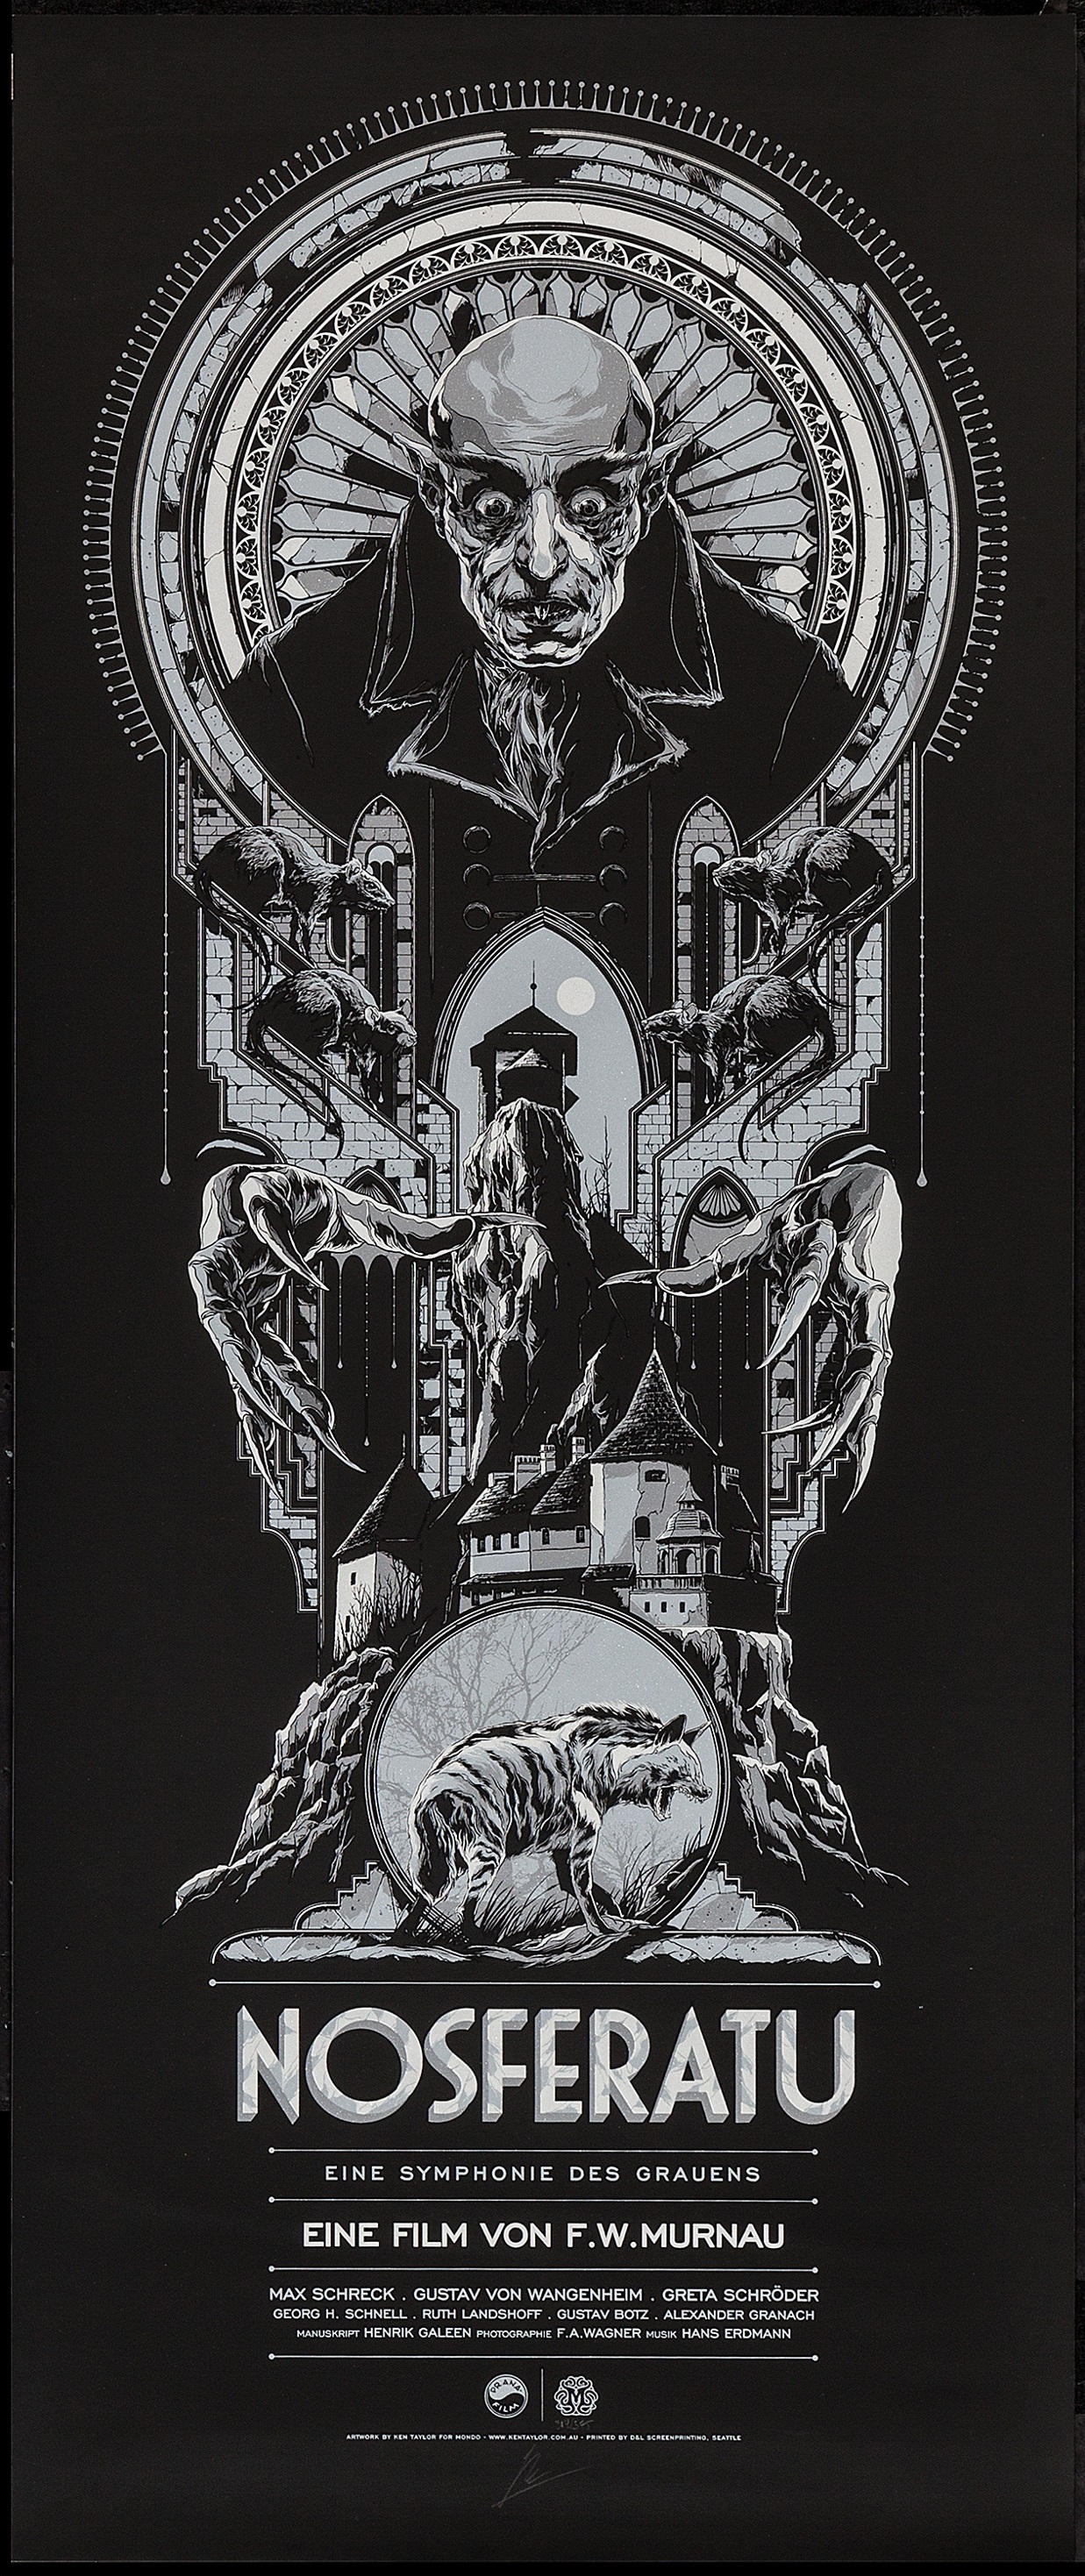 Nosferatu (1922) poster by Ken Taylor, 2014